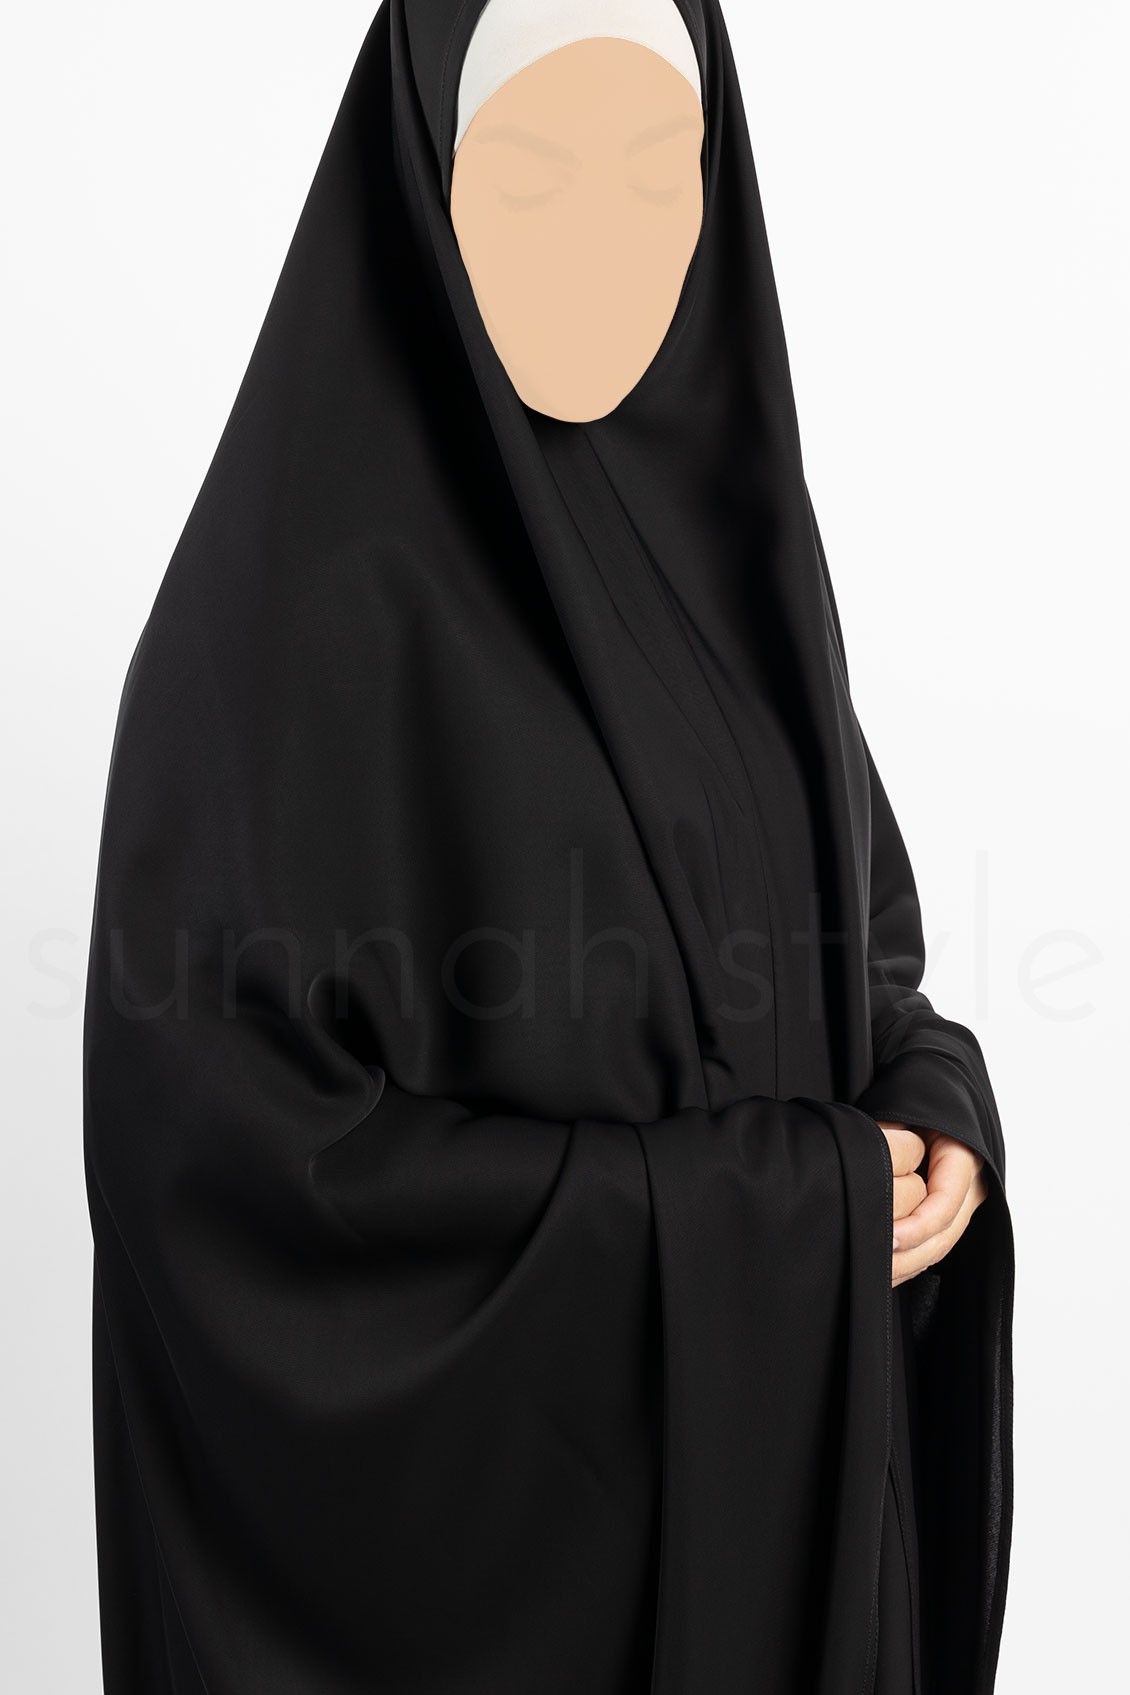 Sunnah Style Essentials Khimar Full Length Tall Black